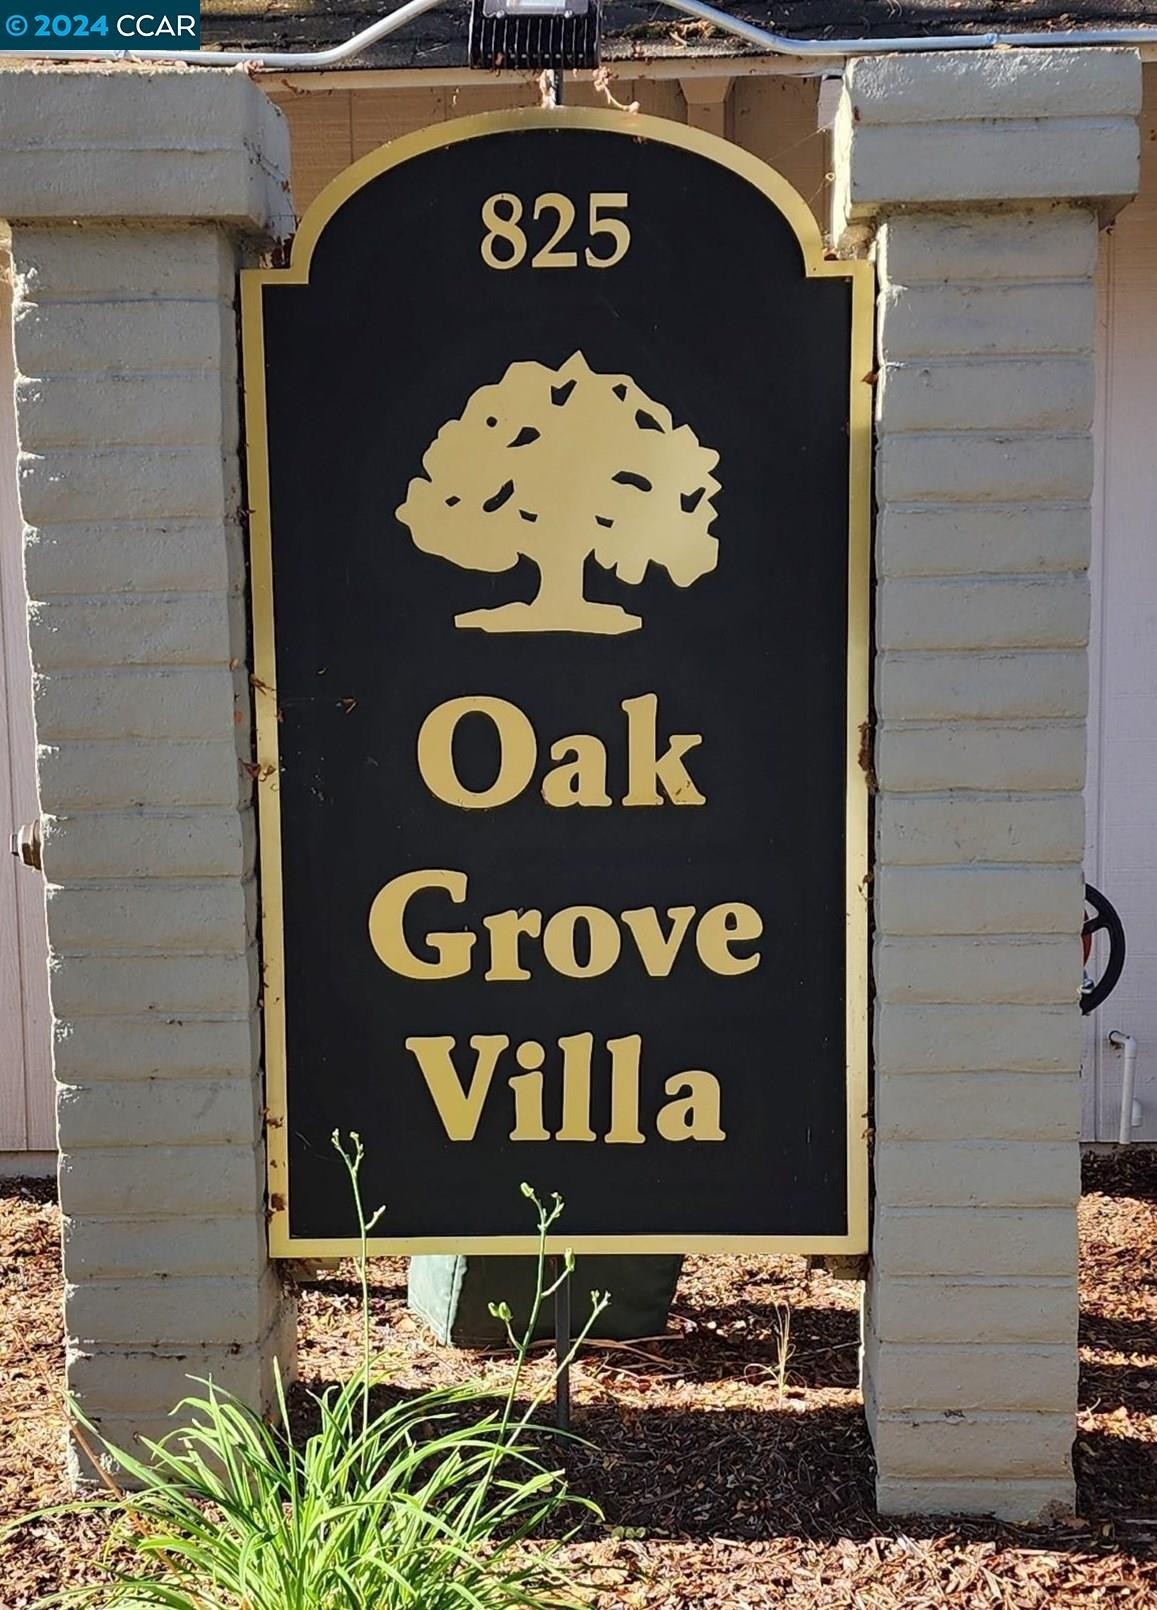 2. 825 Oak Grove Rd